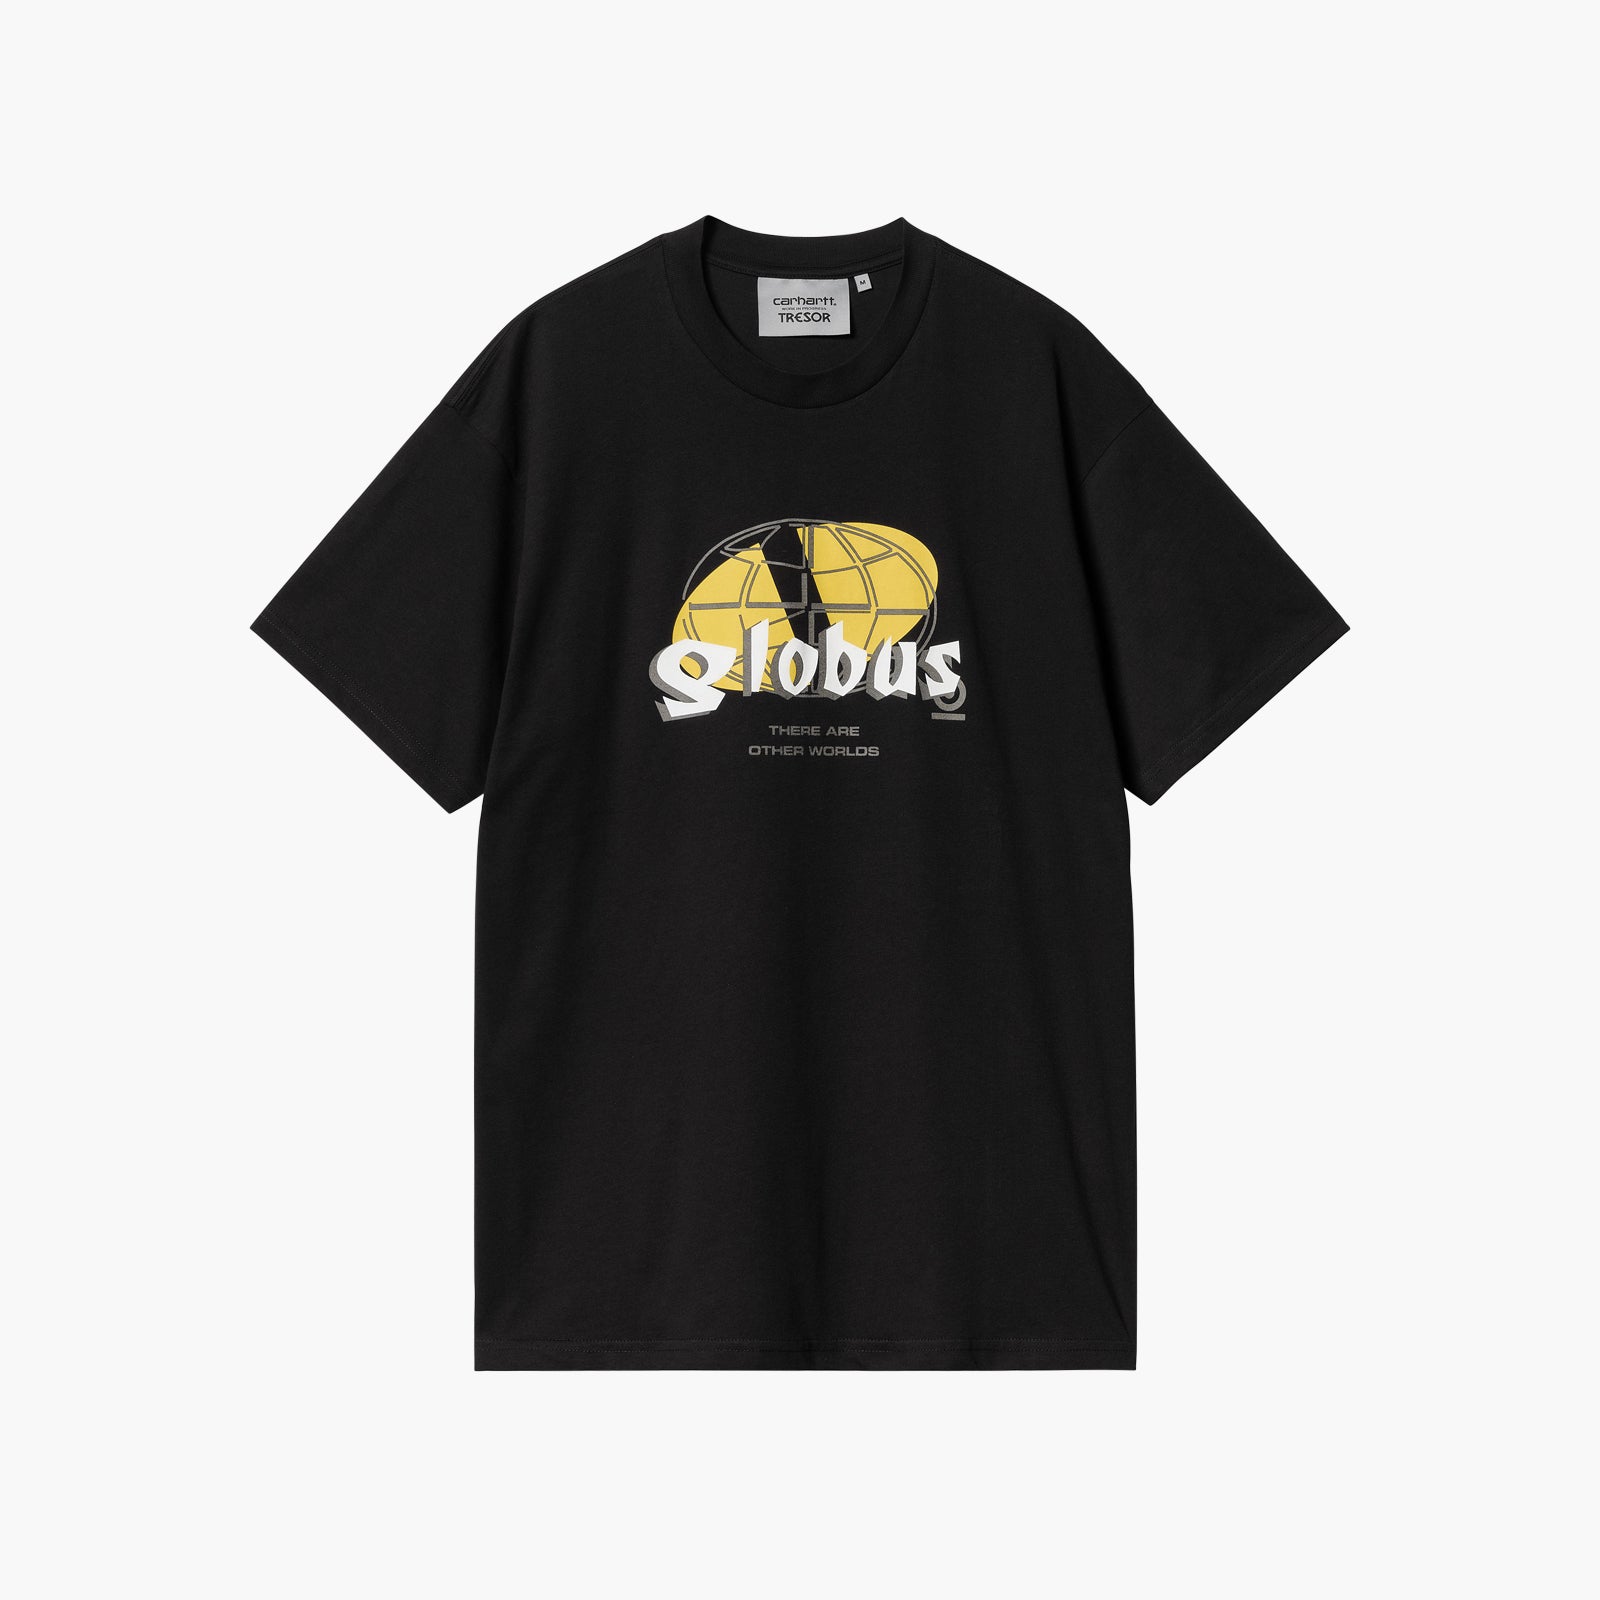 Carhartt WIP x Tresor Globus S/S T-Shirt